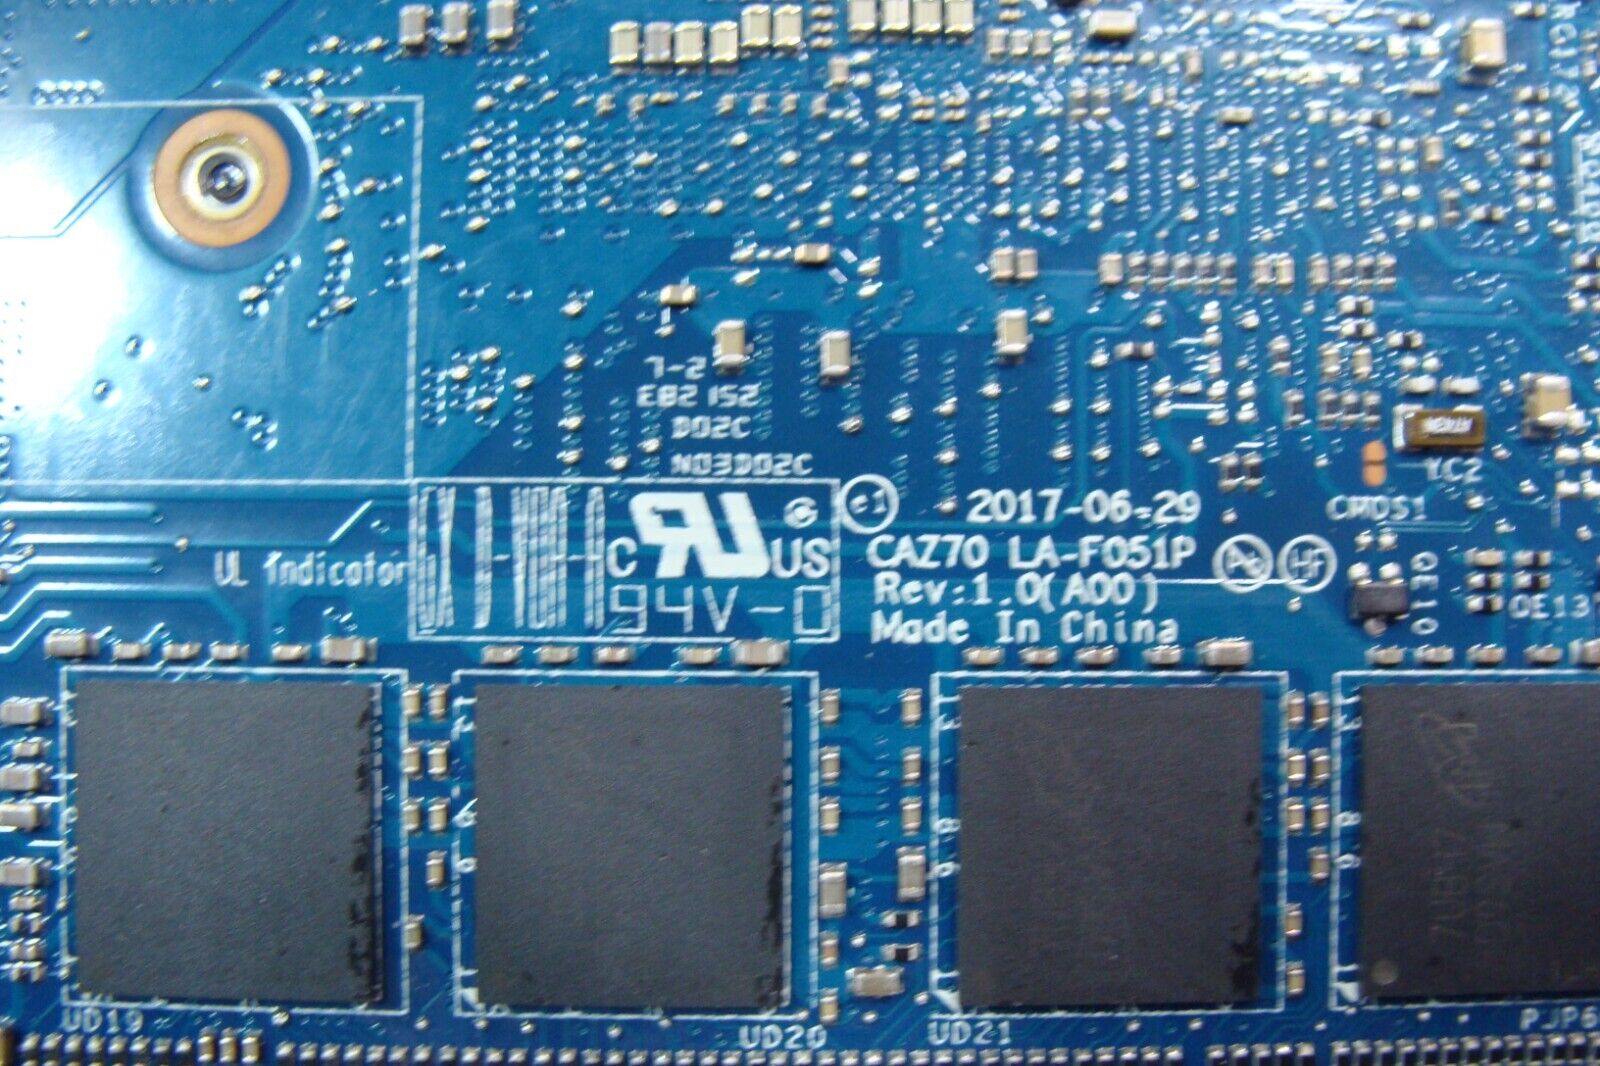 Dell XPS 13.3” 13 9360 OEM Laptop Intel i7-8550U 1.8GHz 16GB Motherboard MJ08X